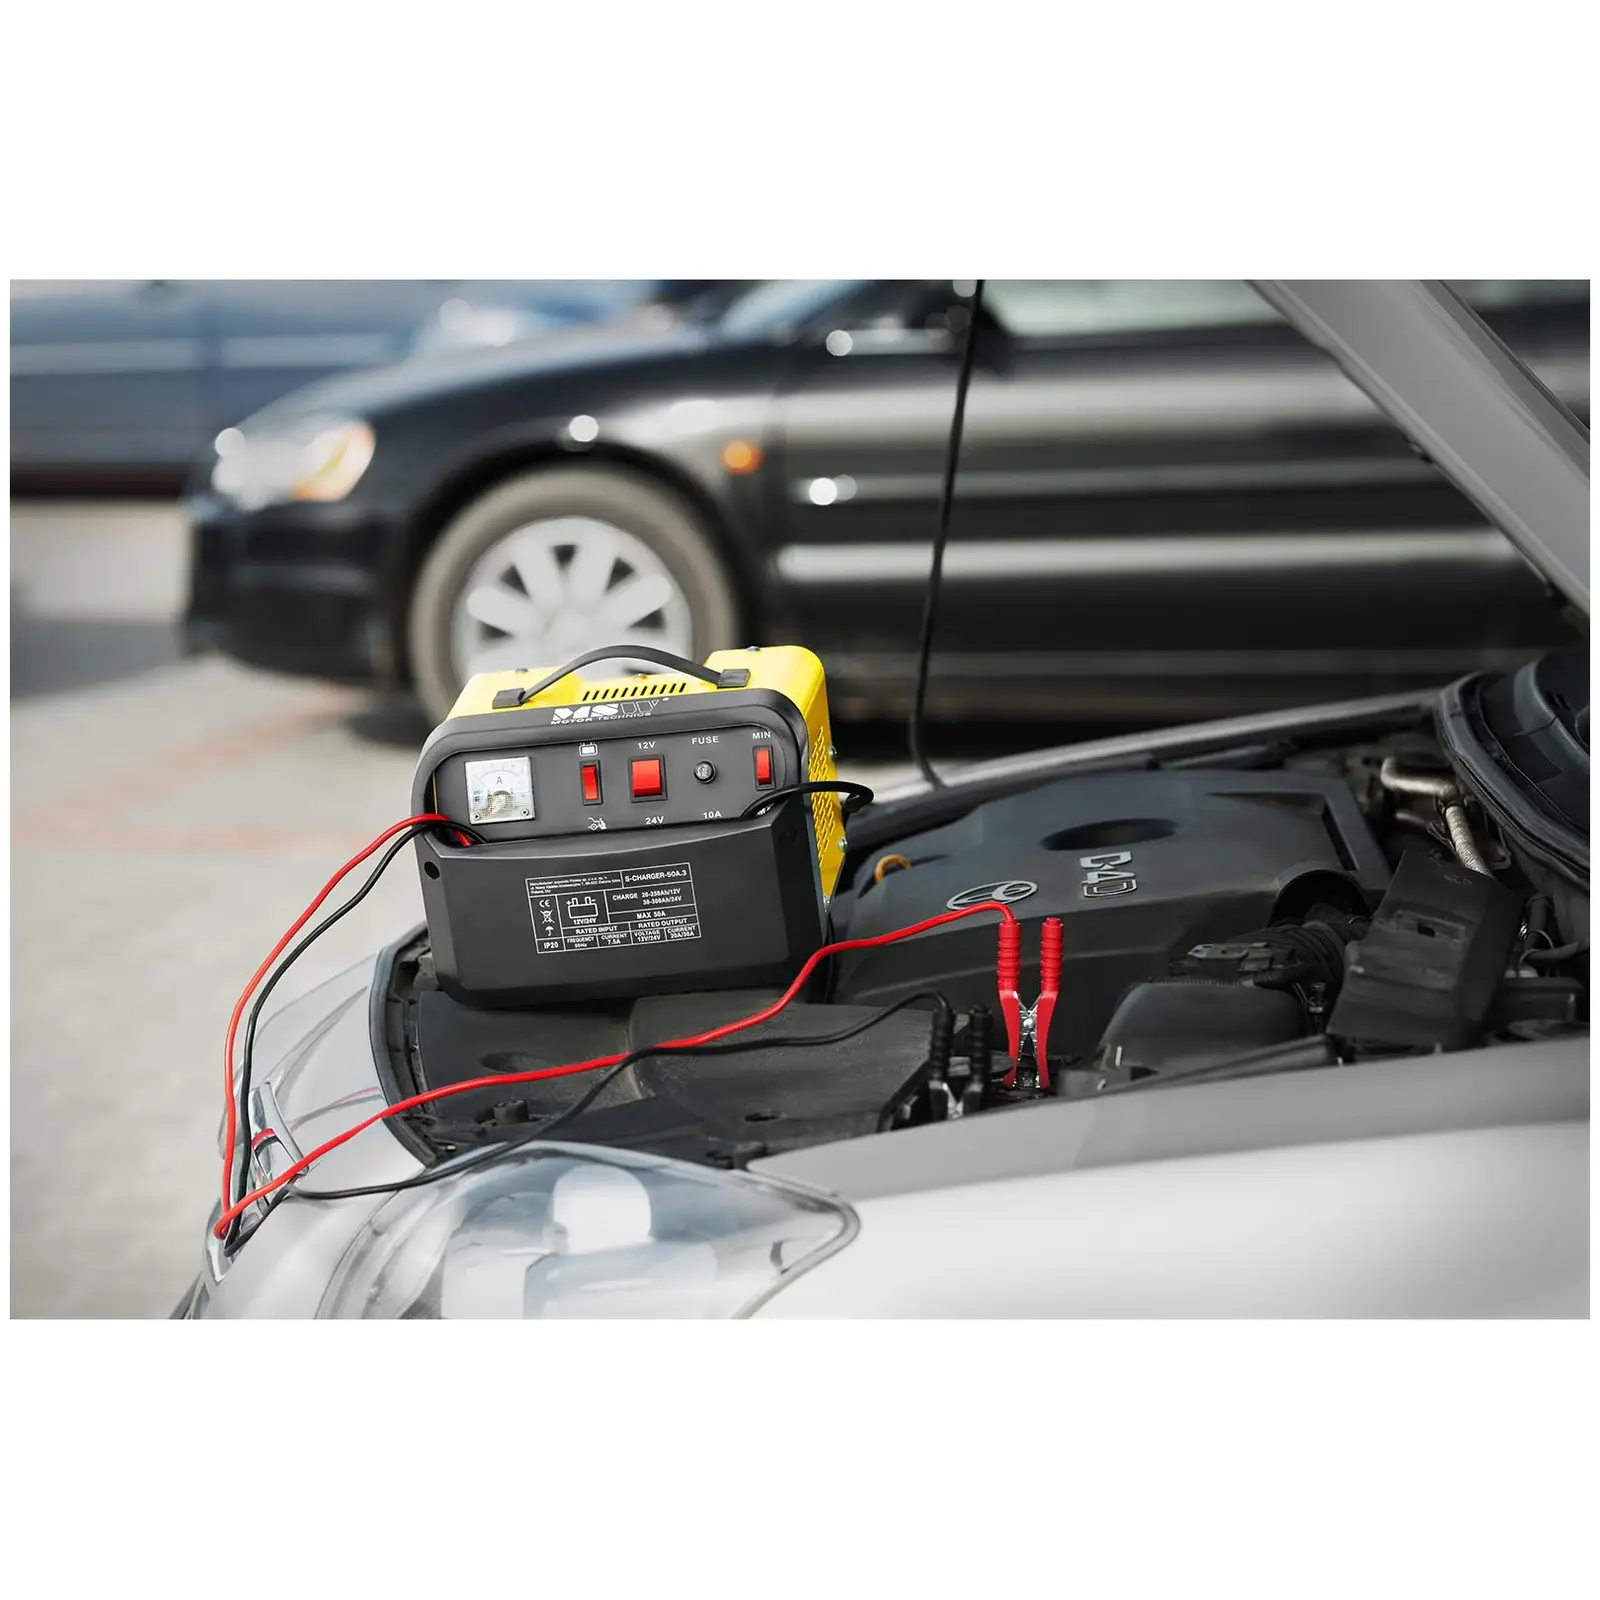 Ocasión Cargador de batería de coche - arranque instantáneo - 12/24 V - 20/30 A - panel de control inclinado